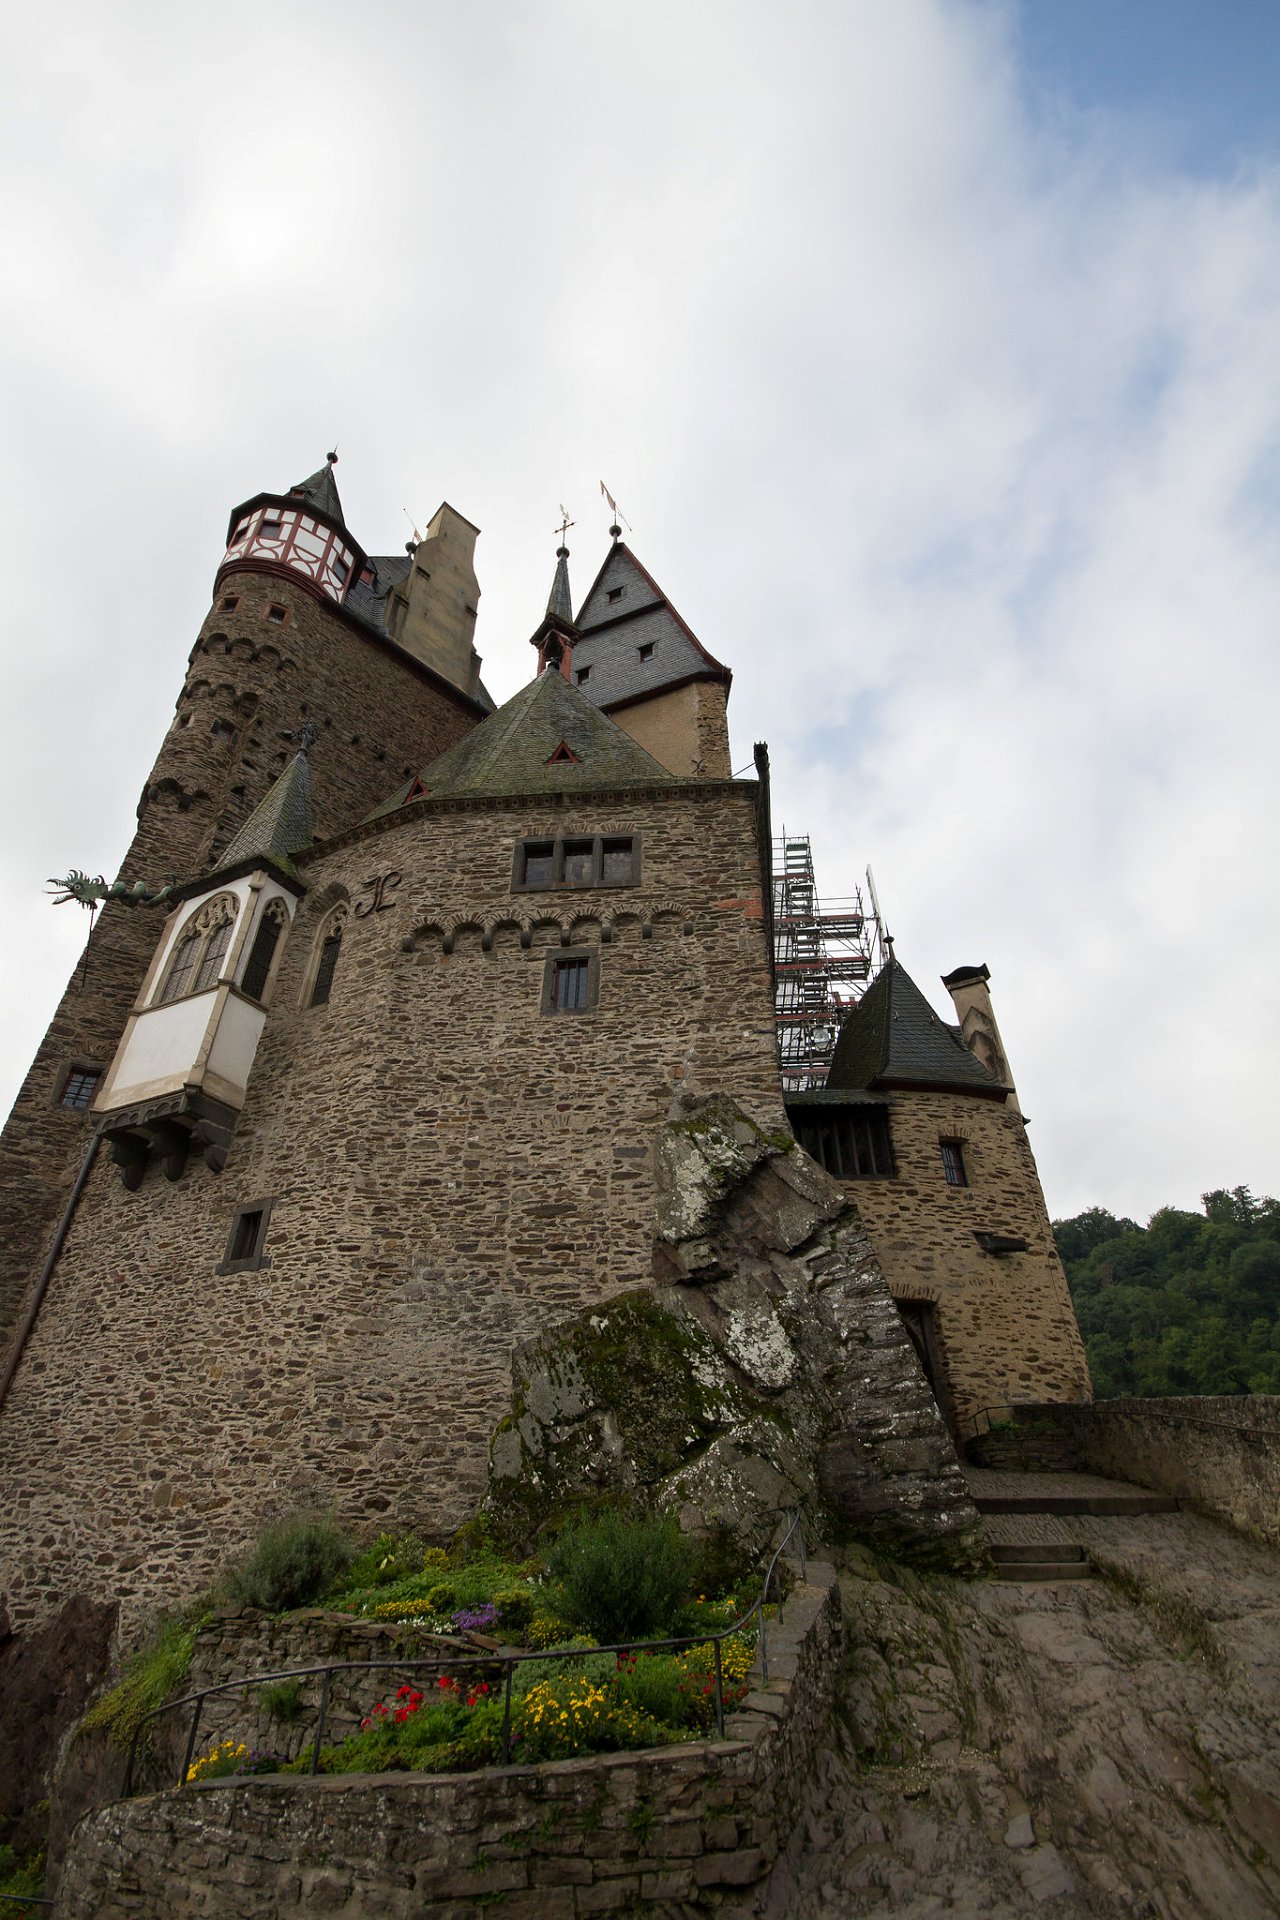 Eltz Castle, Castles in Germany 3